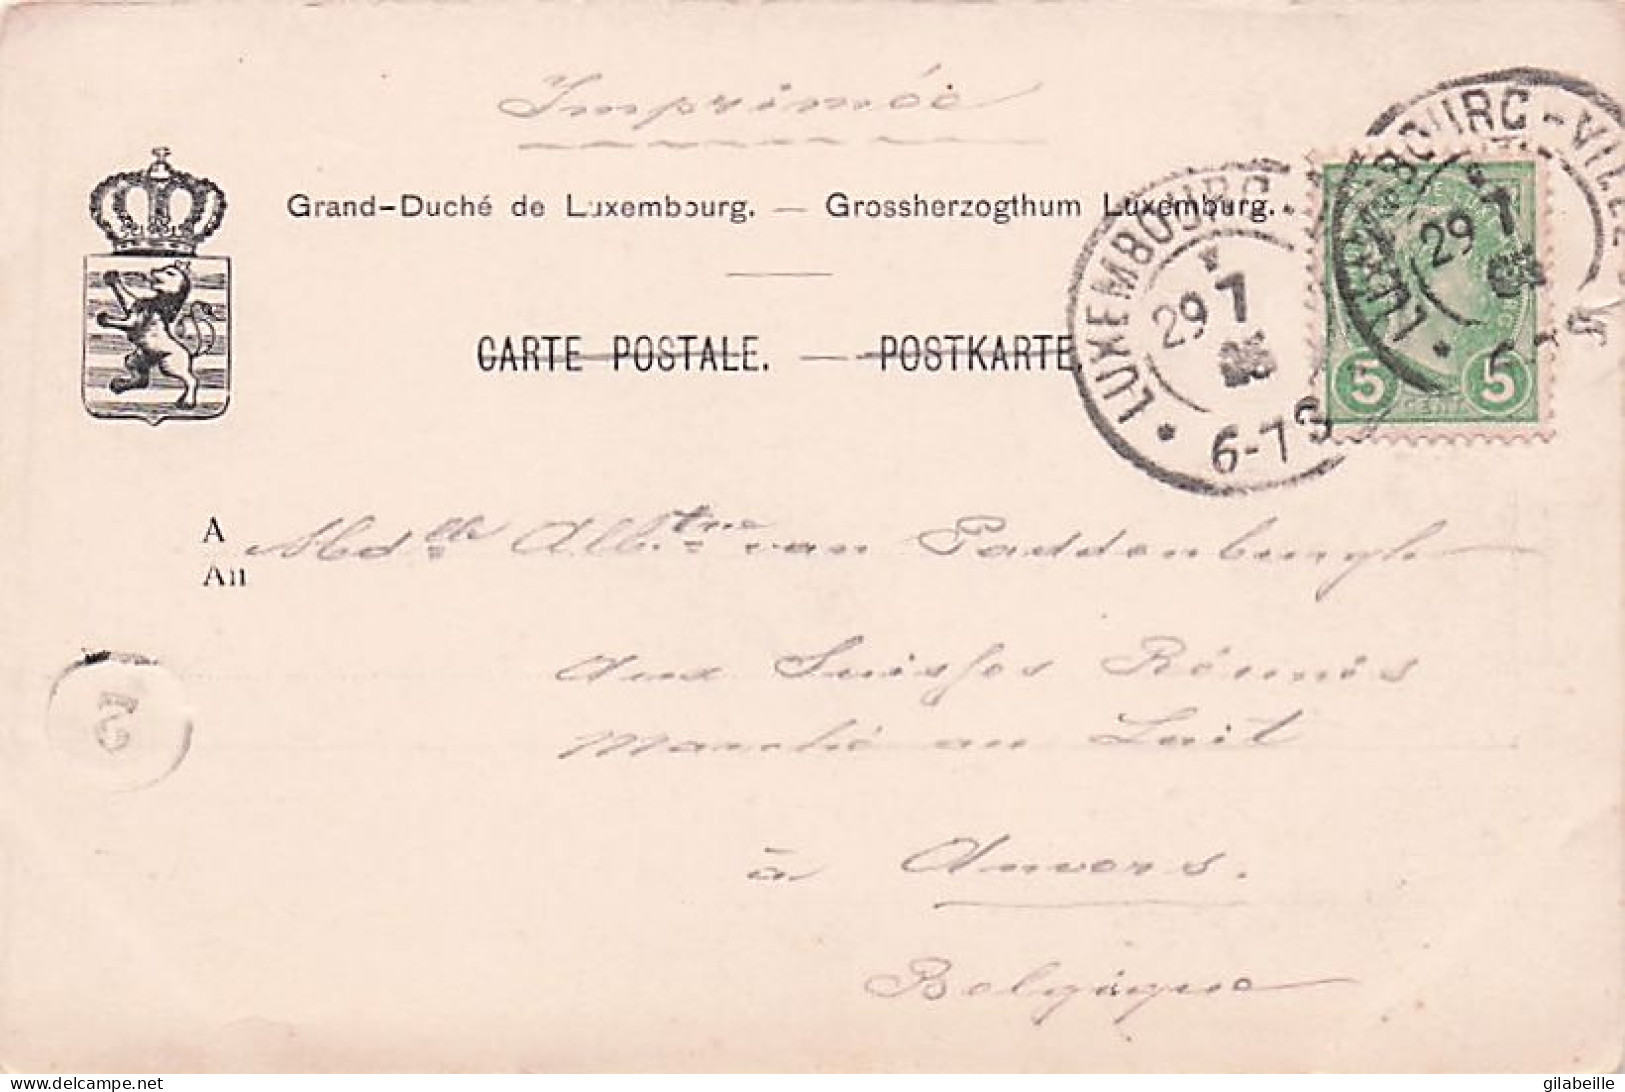 Luxembourg -  Boulevard Et Viaduc  - 1905 - Luxembourg - Ville